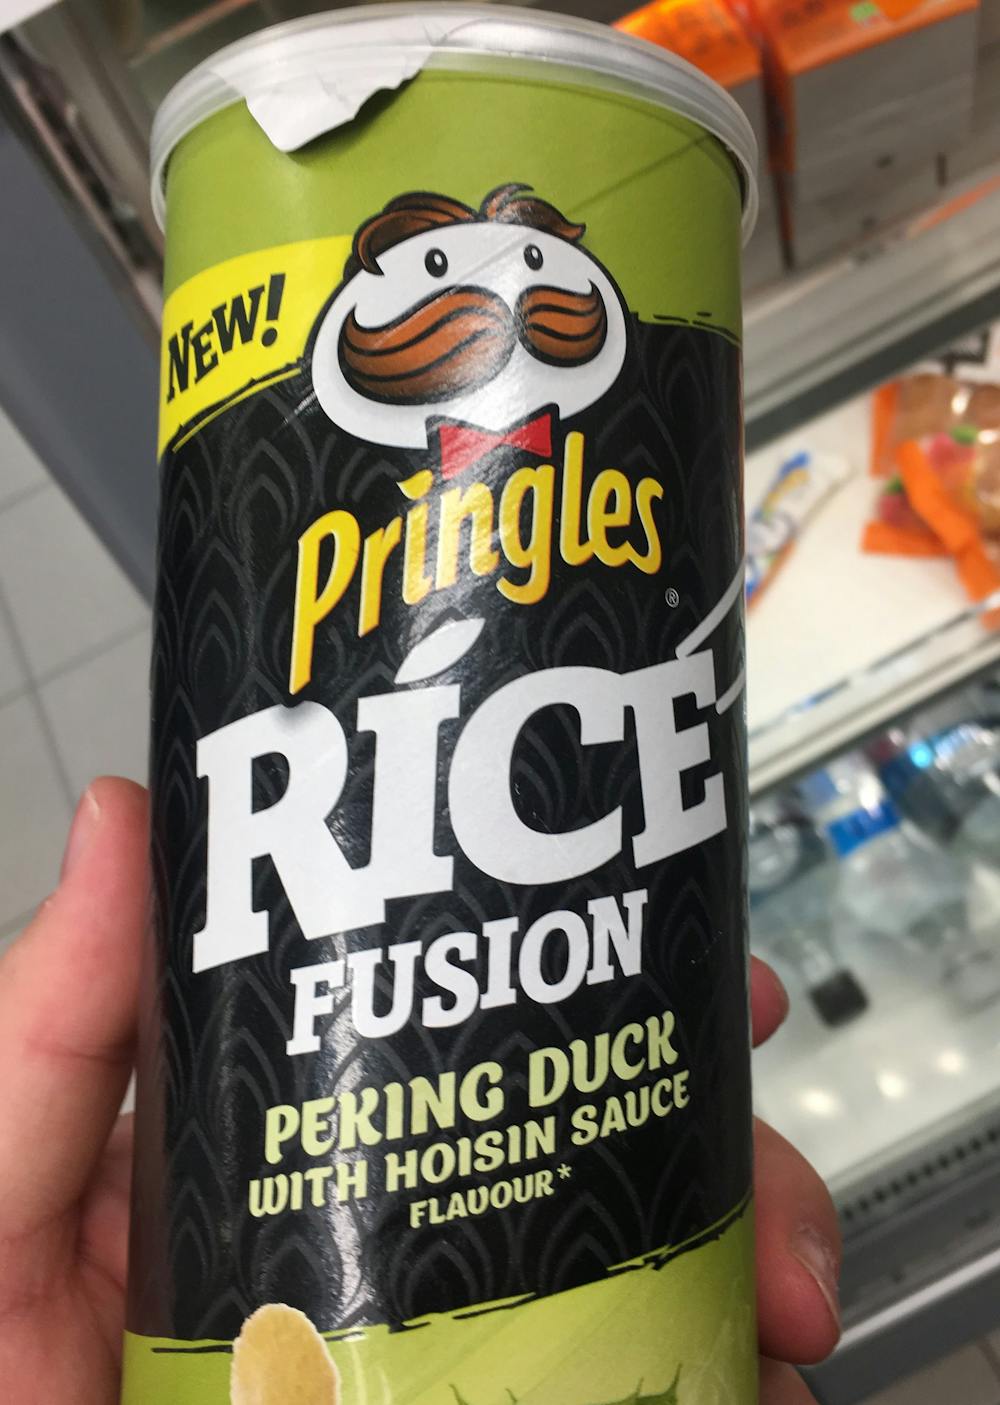 Rice fusion peking duck, Pringles